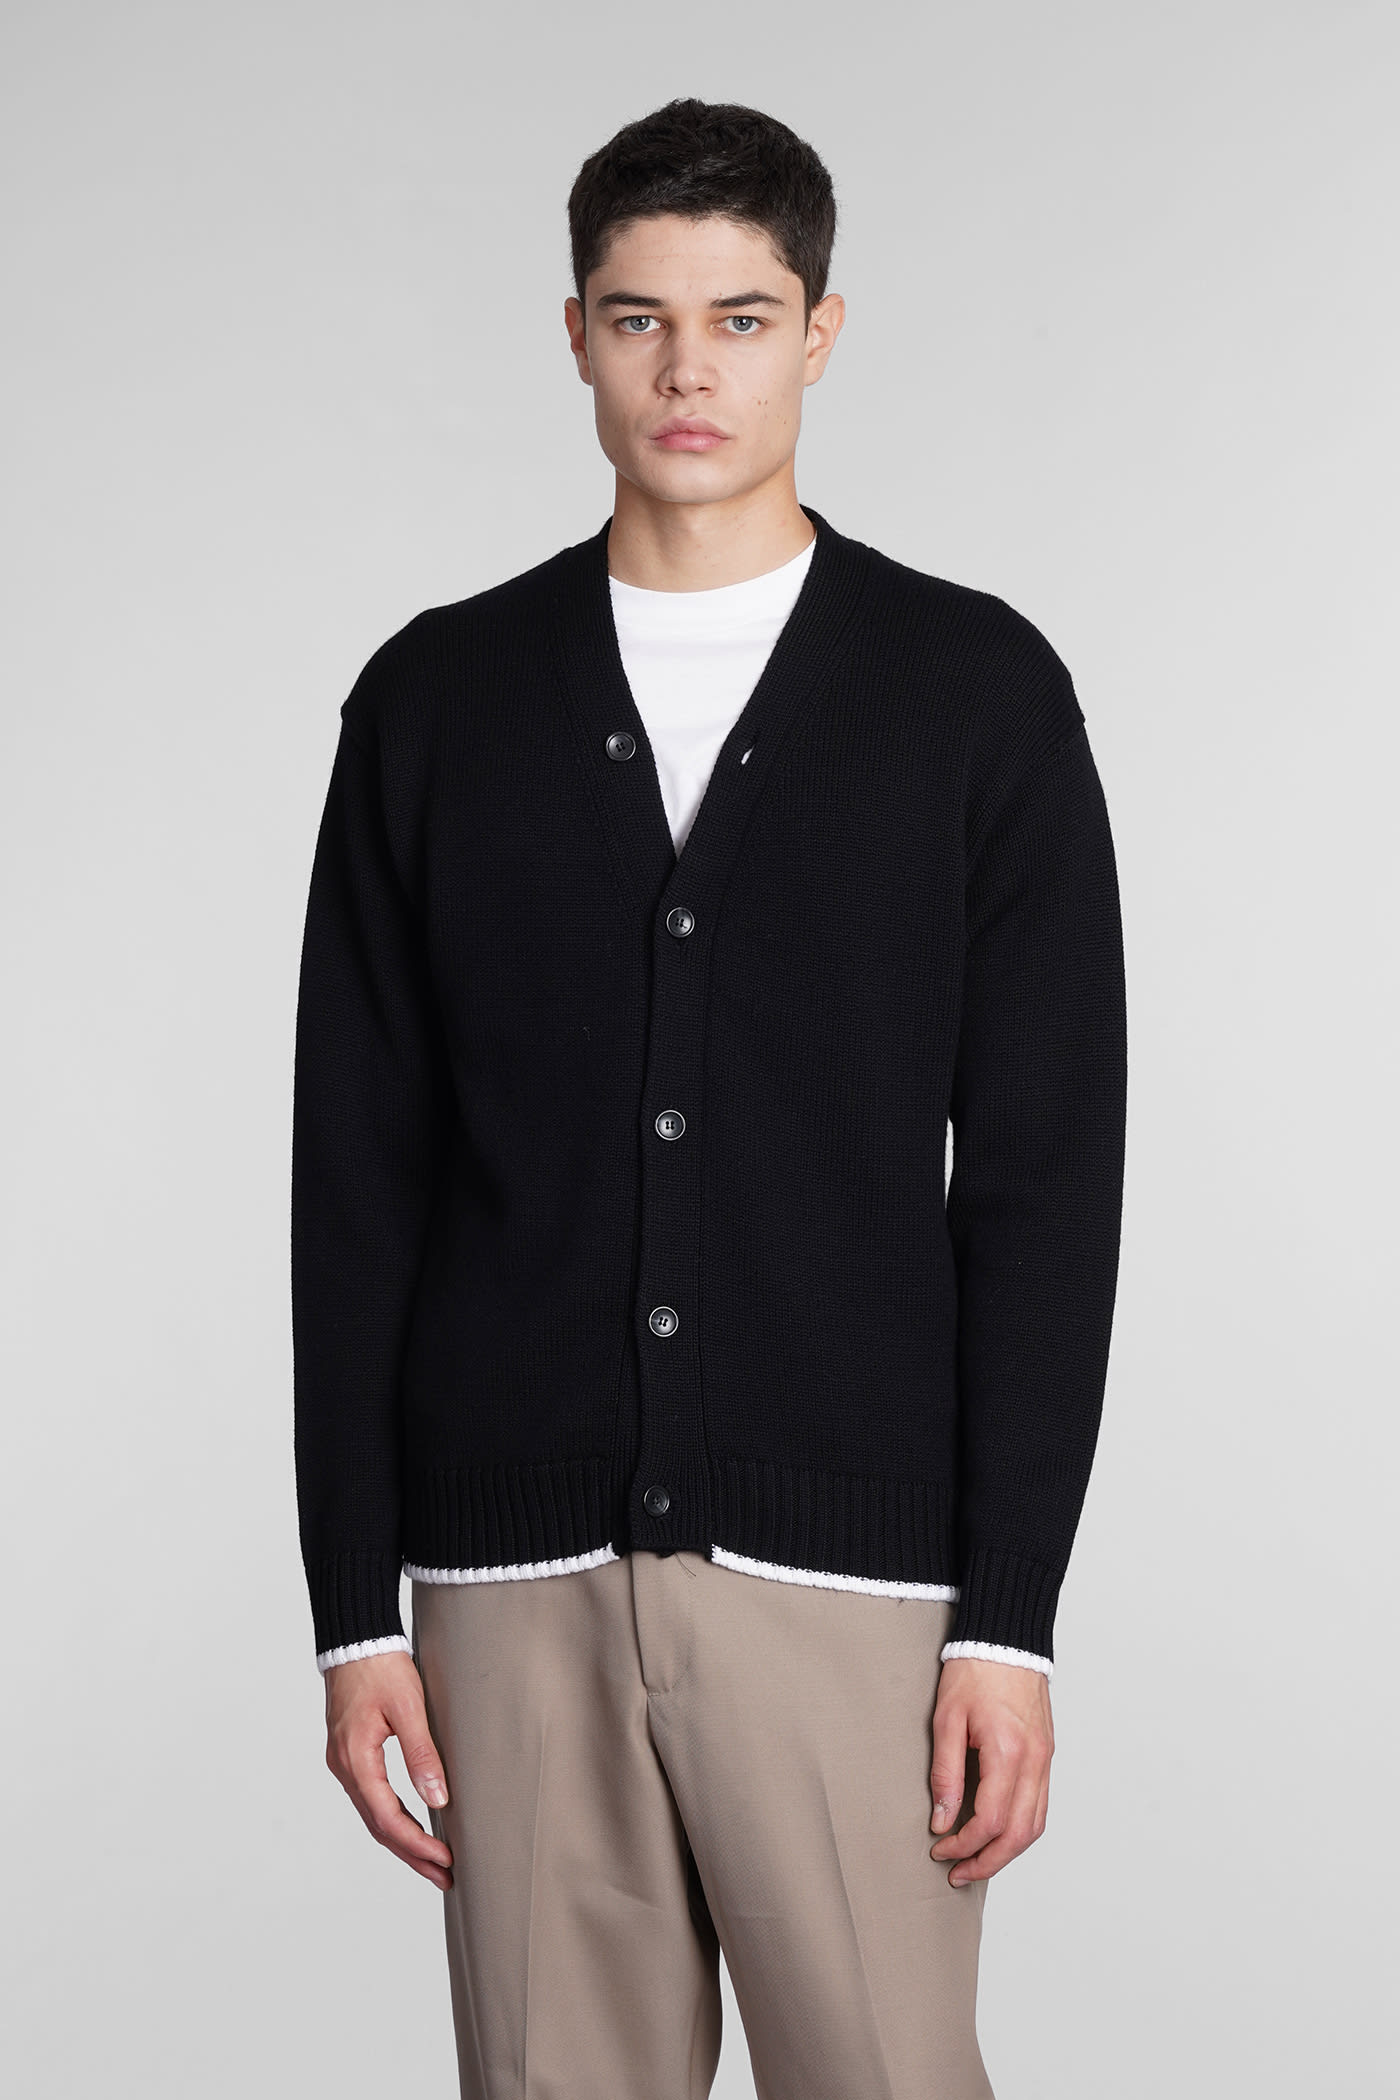 Low Brand Cardigan In Black Wool